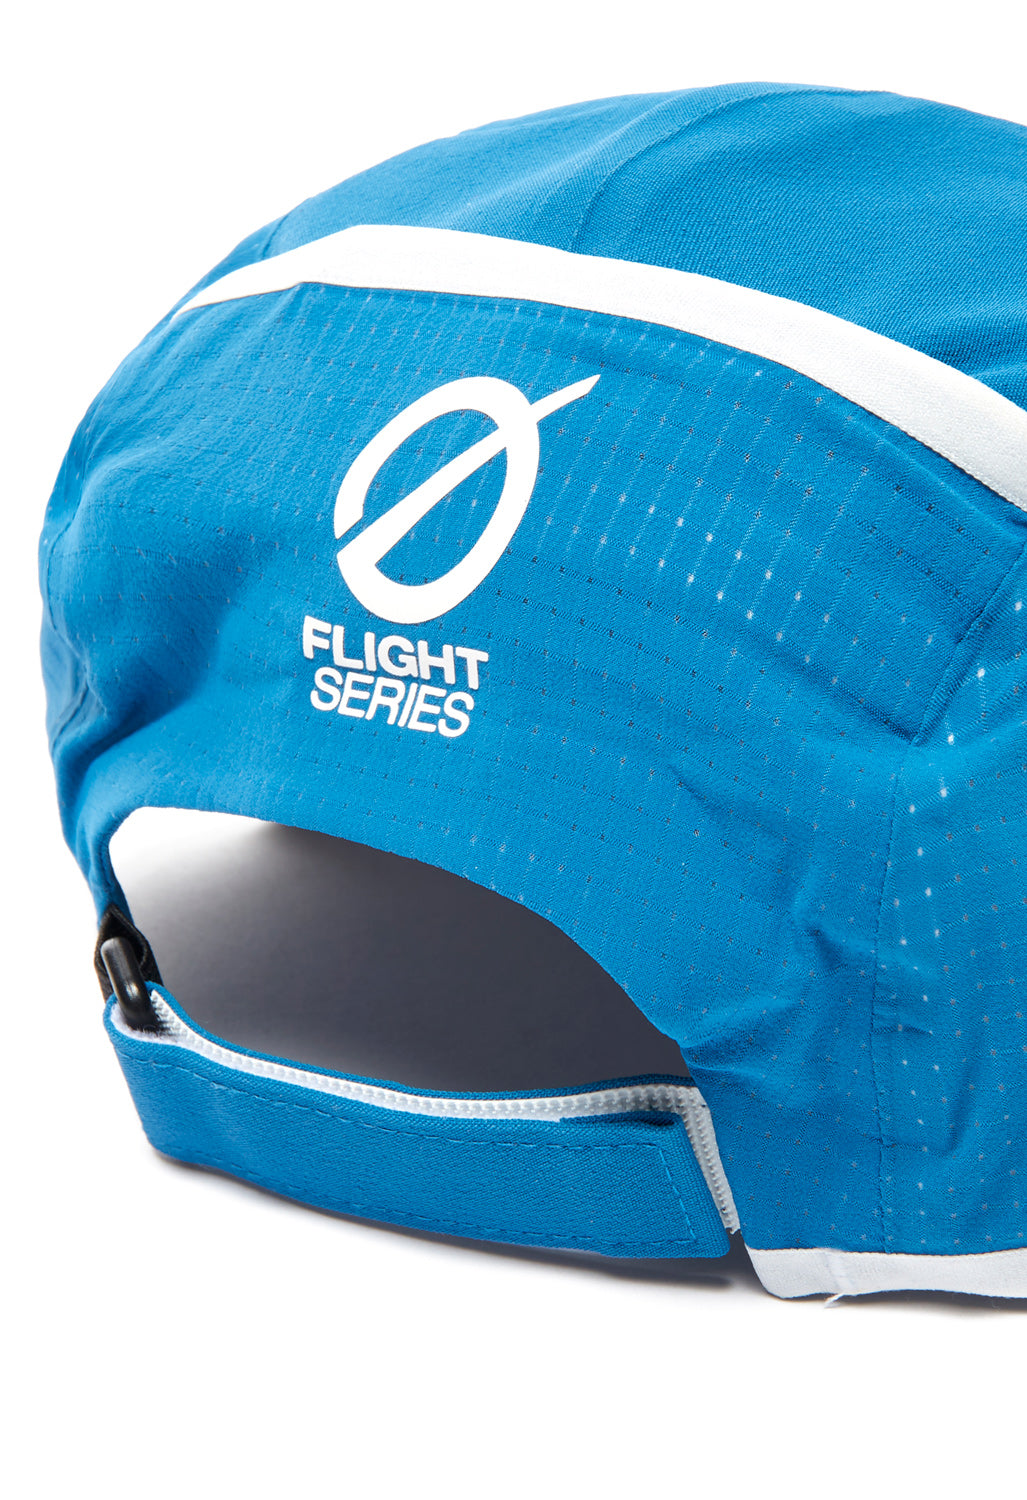 The North Face Flight Ball Cap - Banff Blue